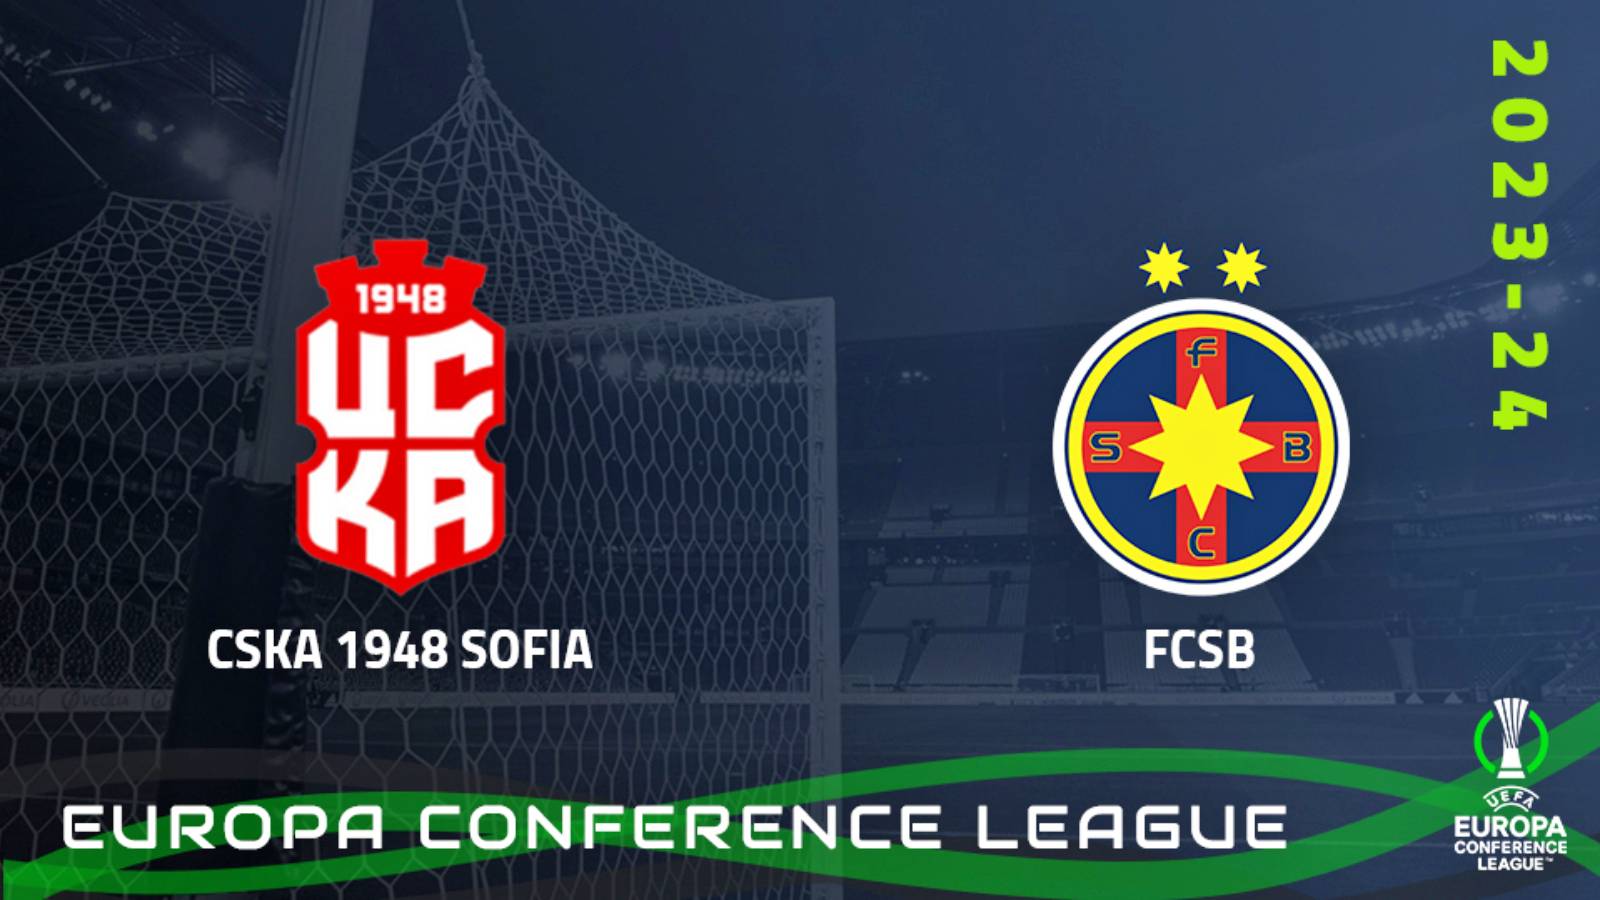 CSKA 1948 SOFIA – FCSB LIVE ANTENA 1 UEFA CONFERENCE LEAGUE VORLÄUFIG